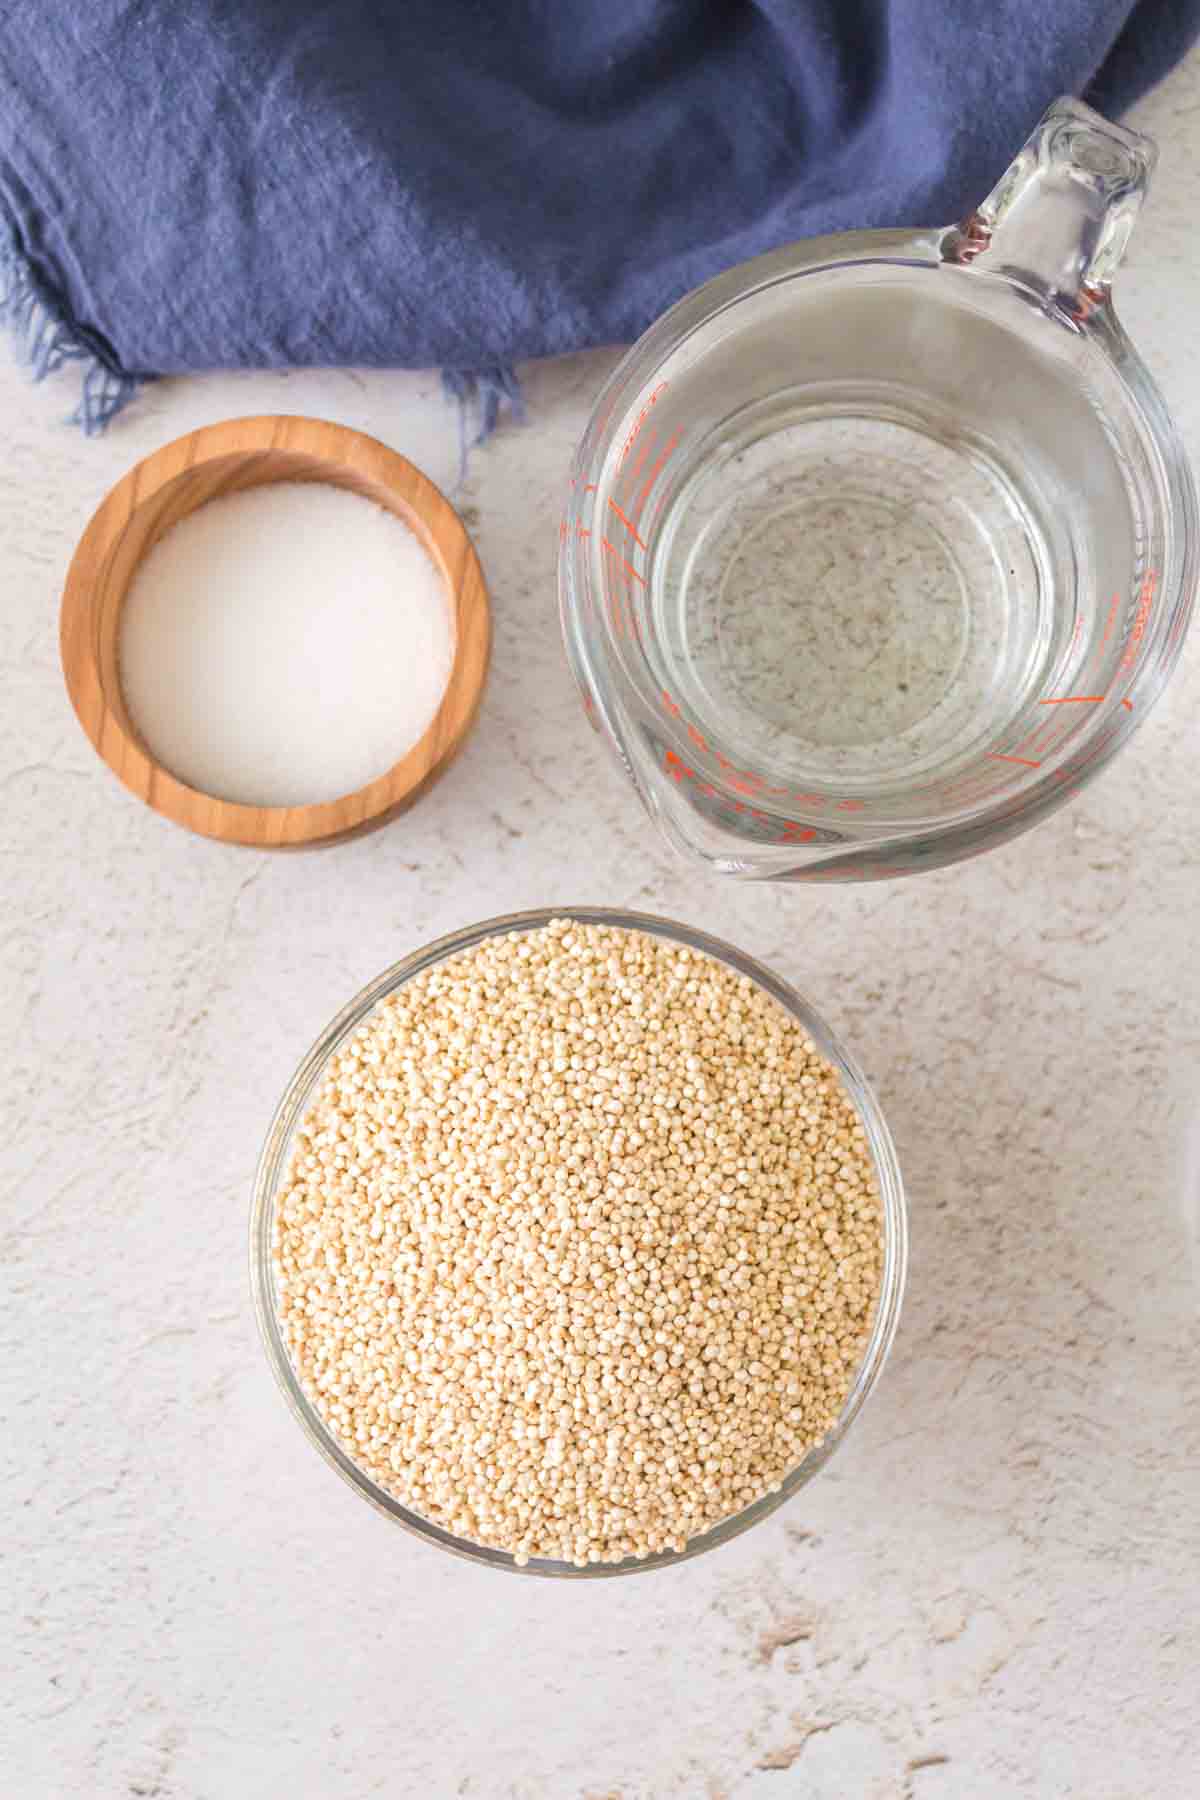 Ingredients for Instant Pot quinoa